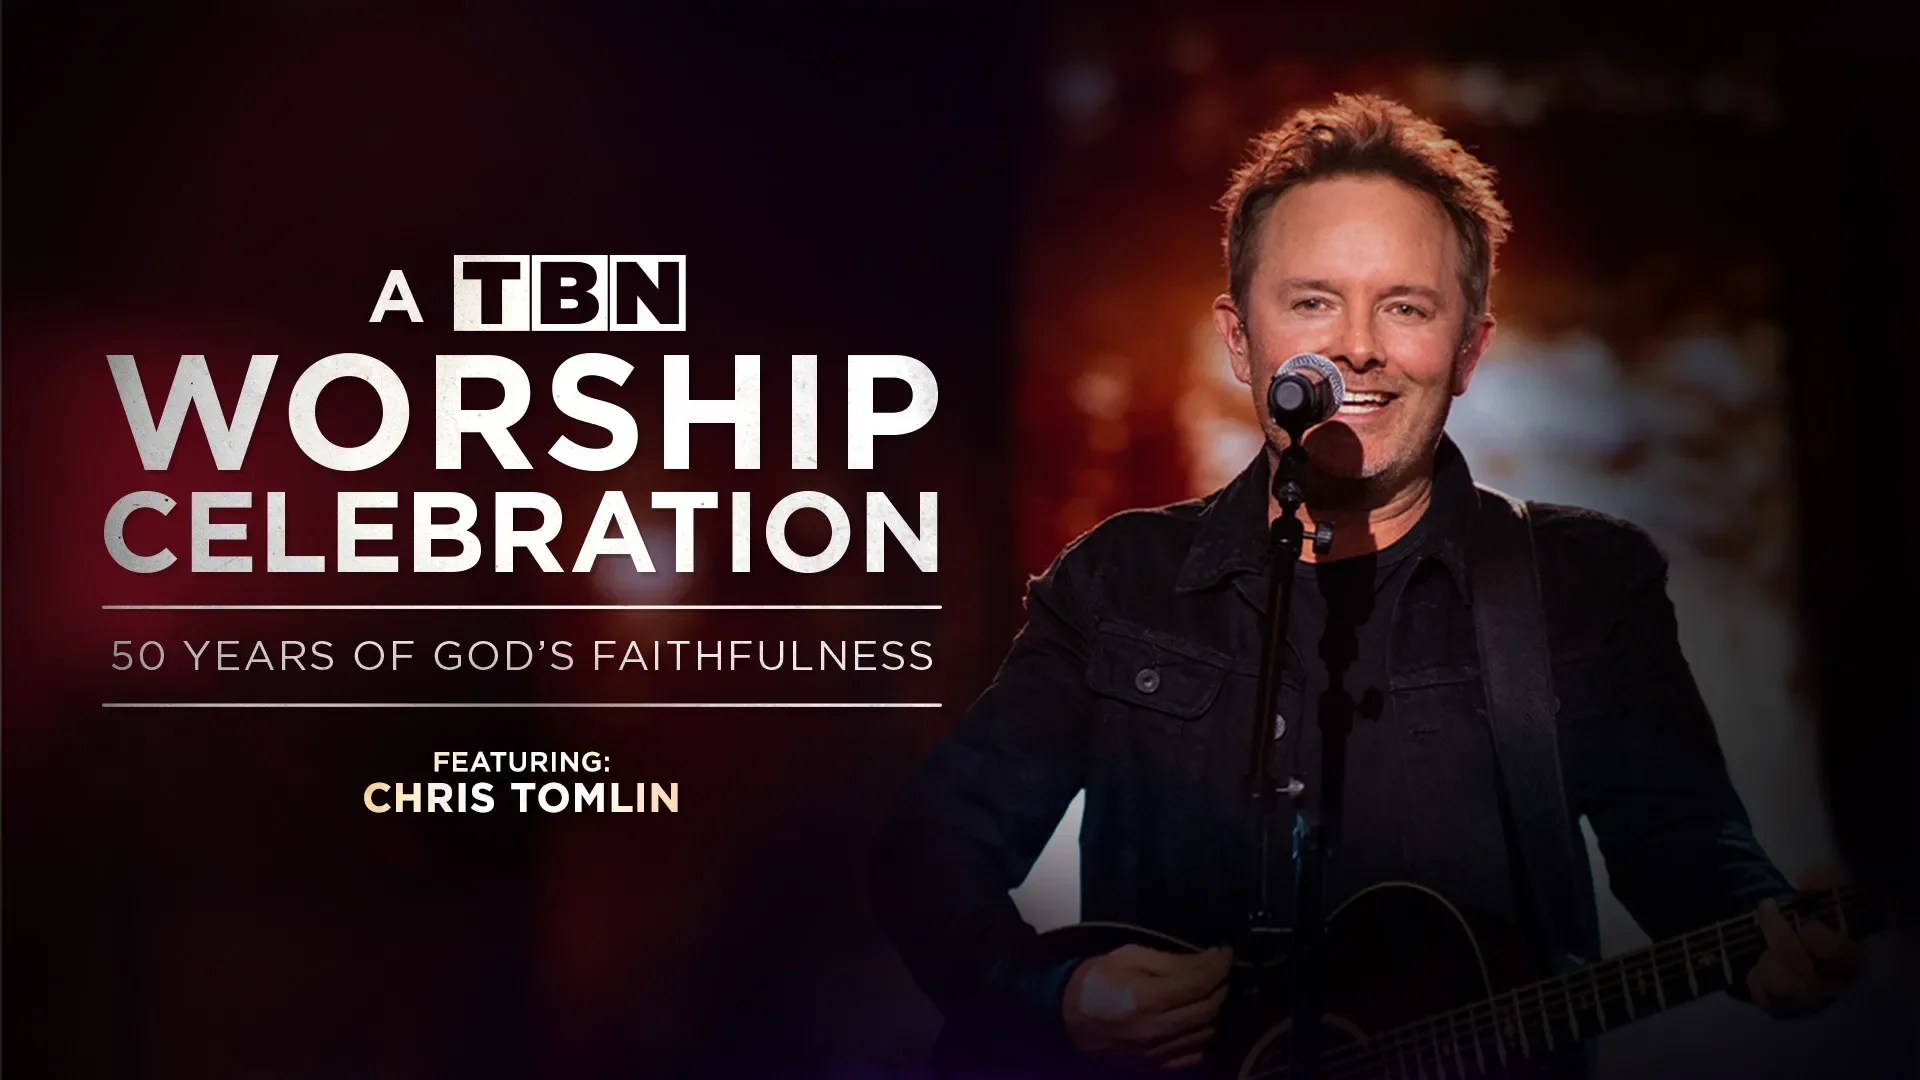 A TBN Worship Celebration with Chris Tomlin